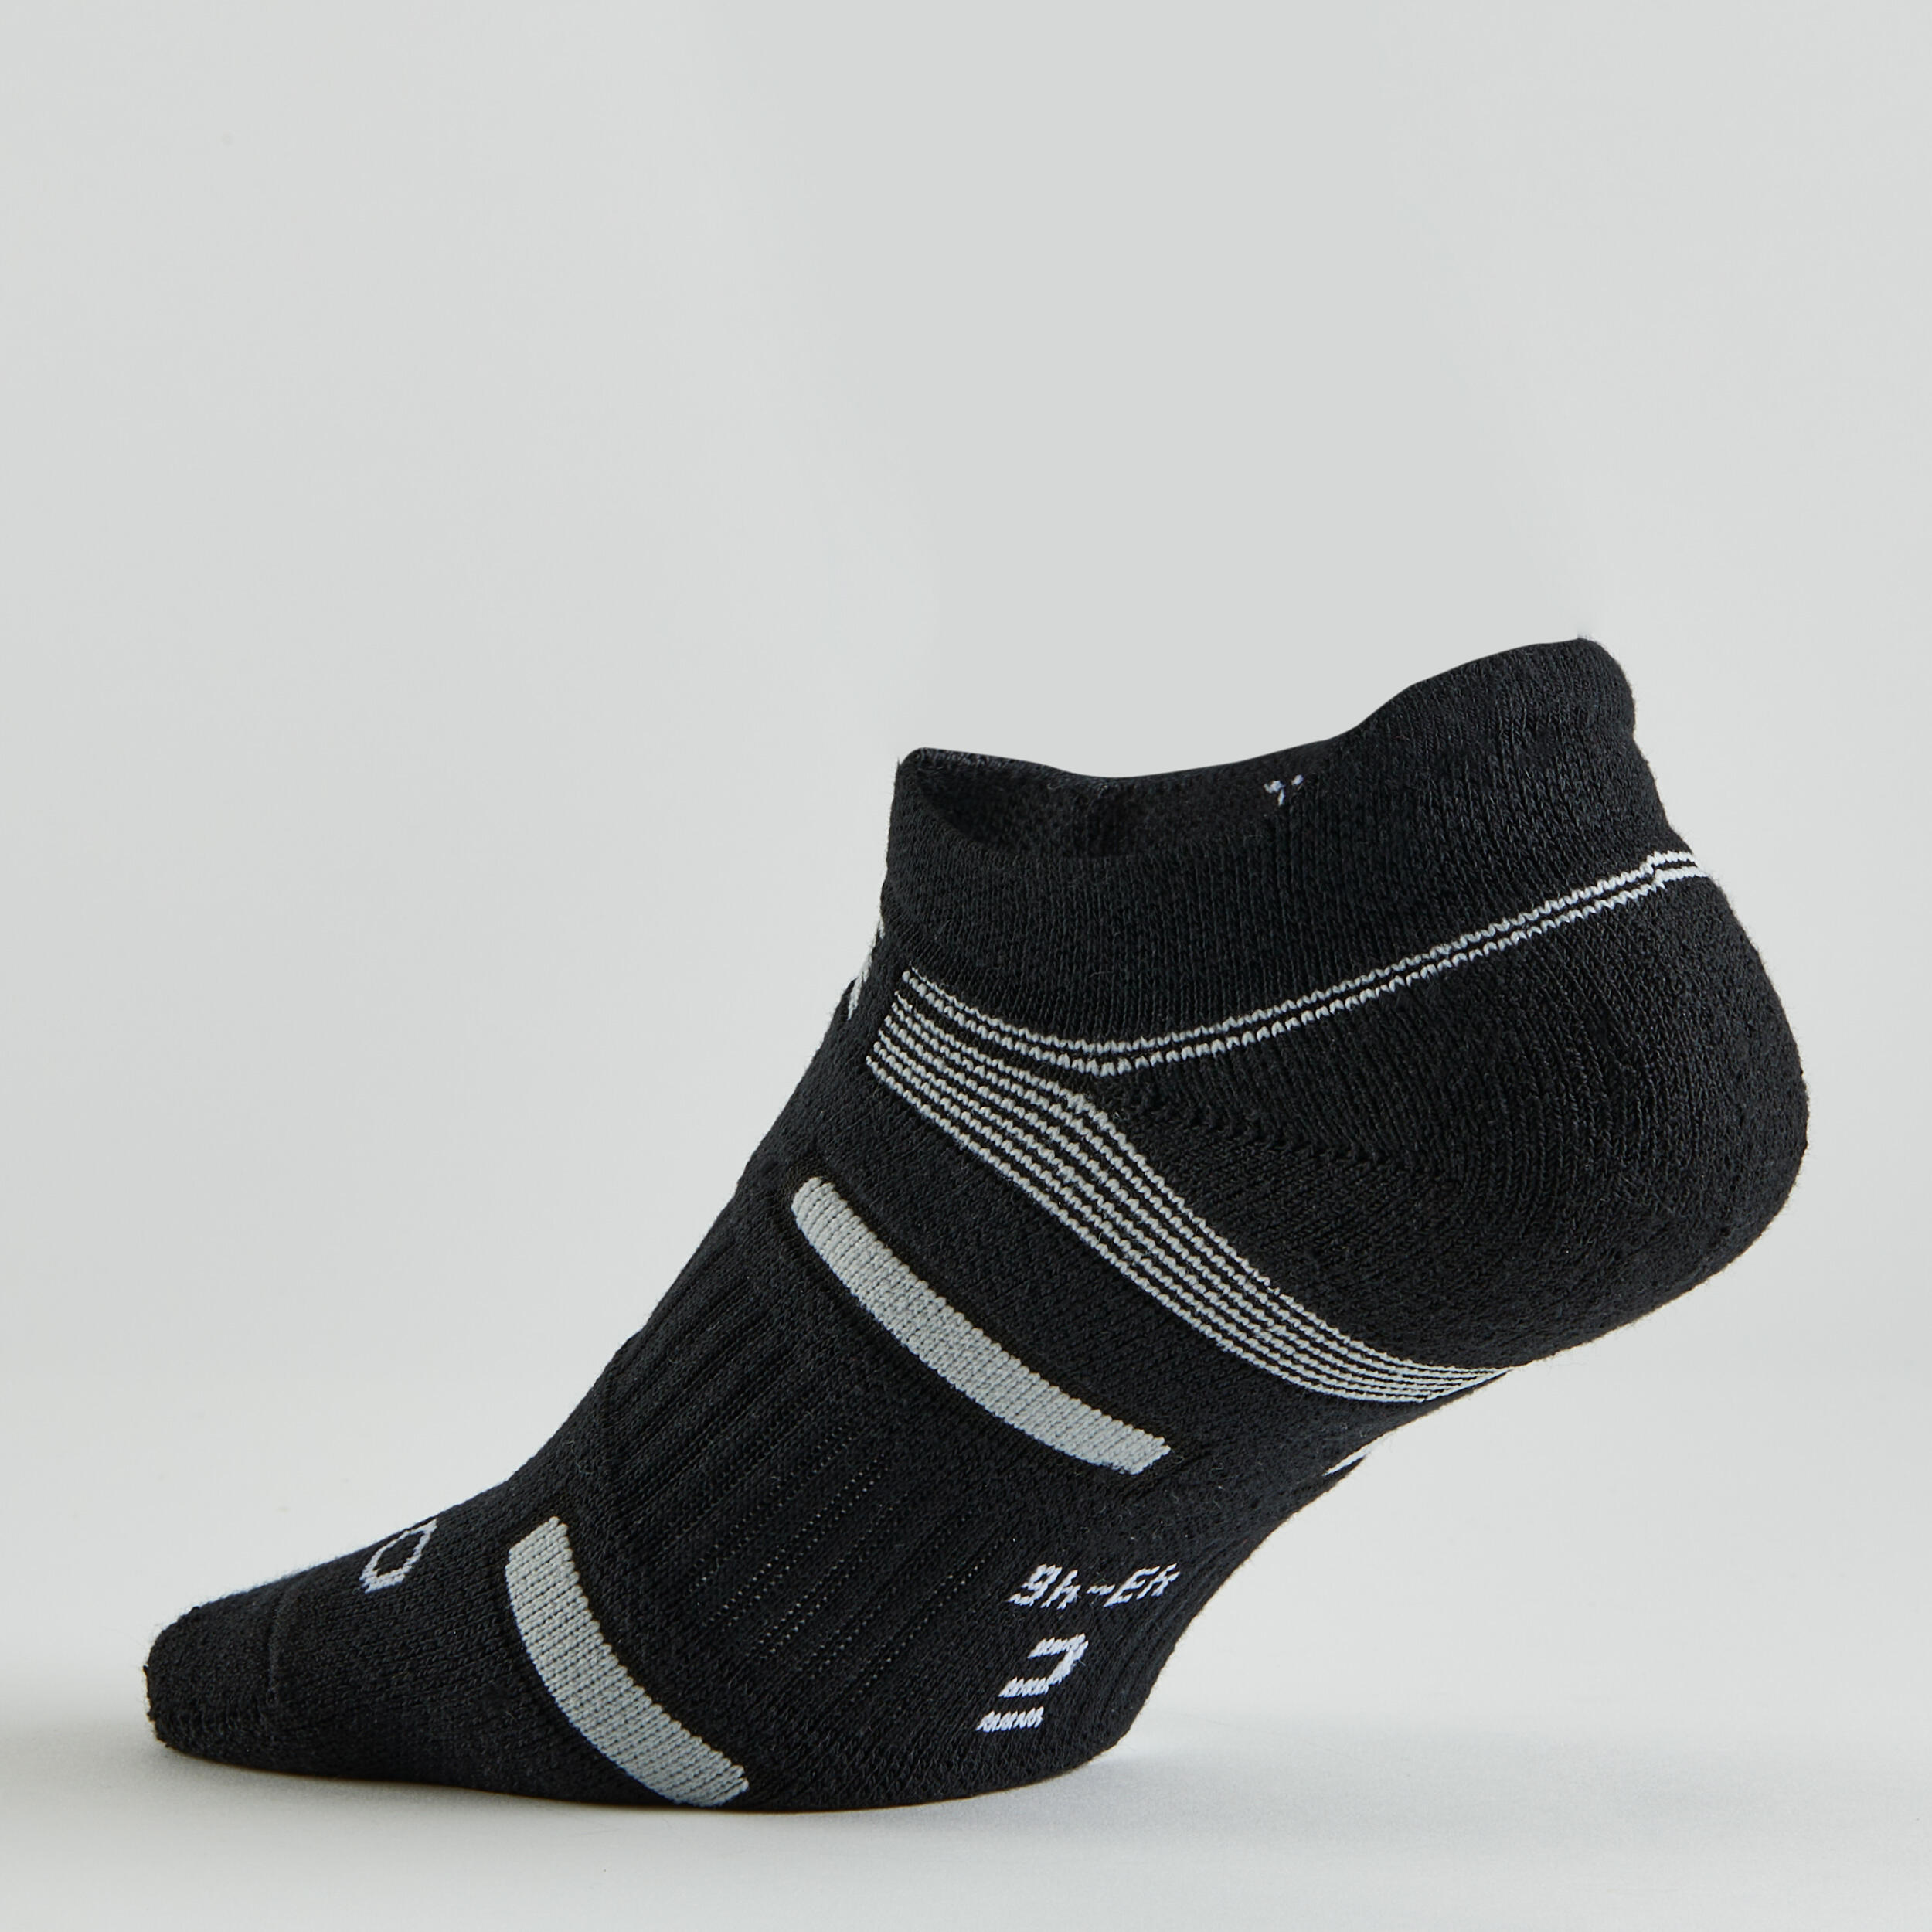 Low Sports Socks RS 560 3-Pack - Black/Grey 5/5